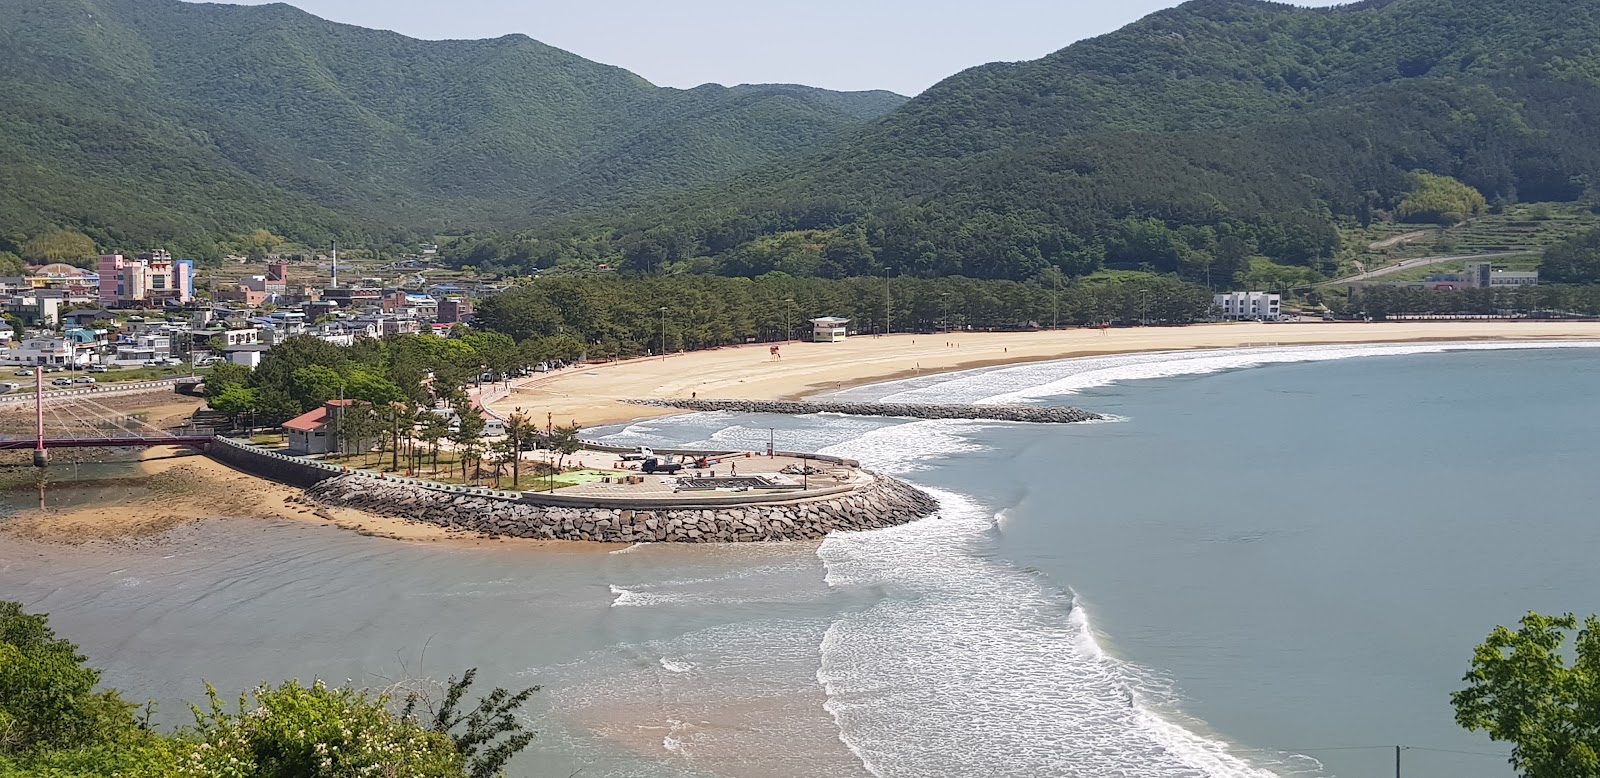 Foto de Sangju Eun Sand Beach - lugar popular entre os apreciadores de relaxamento